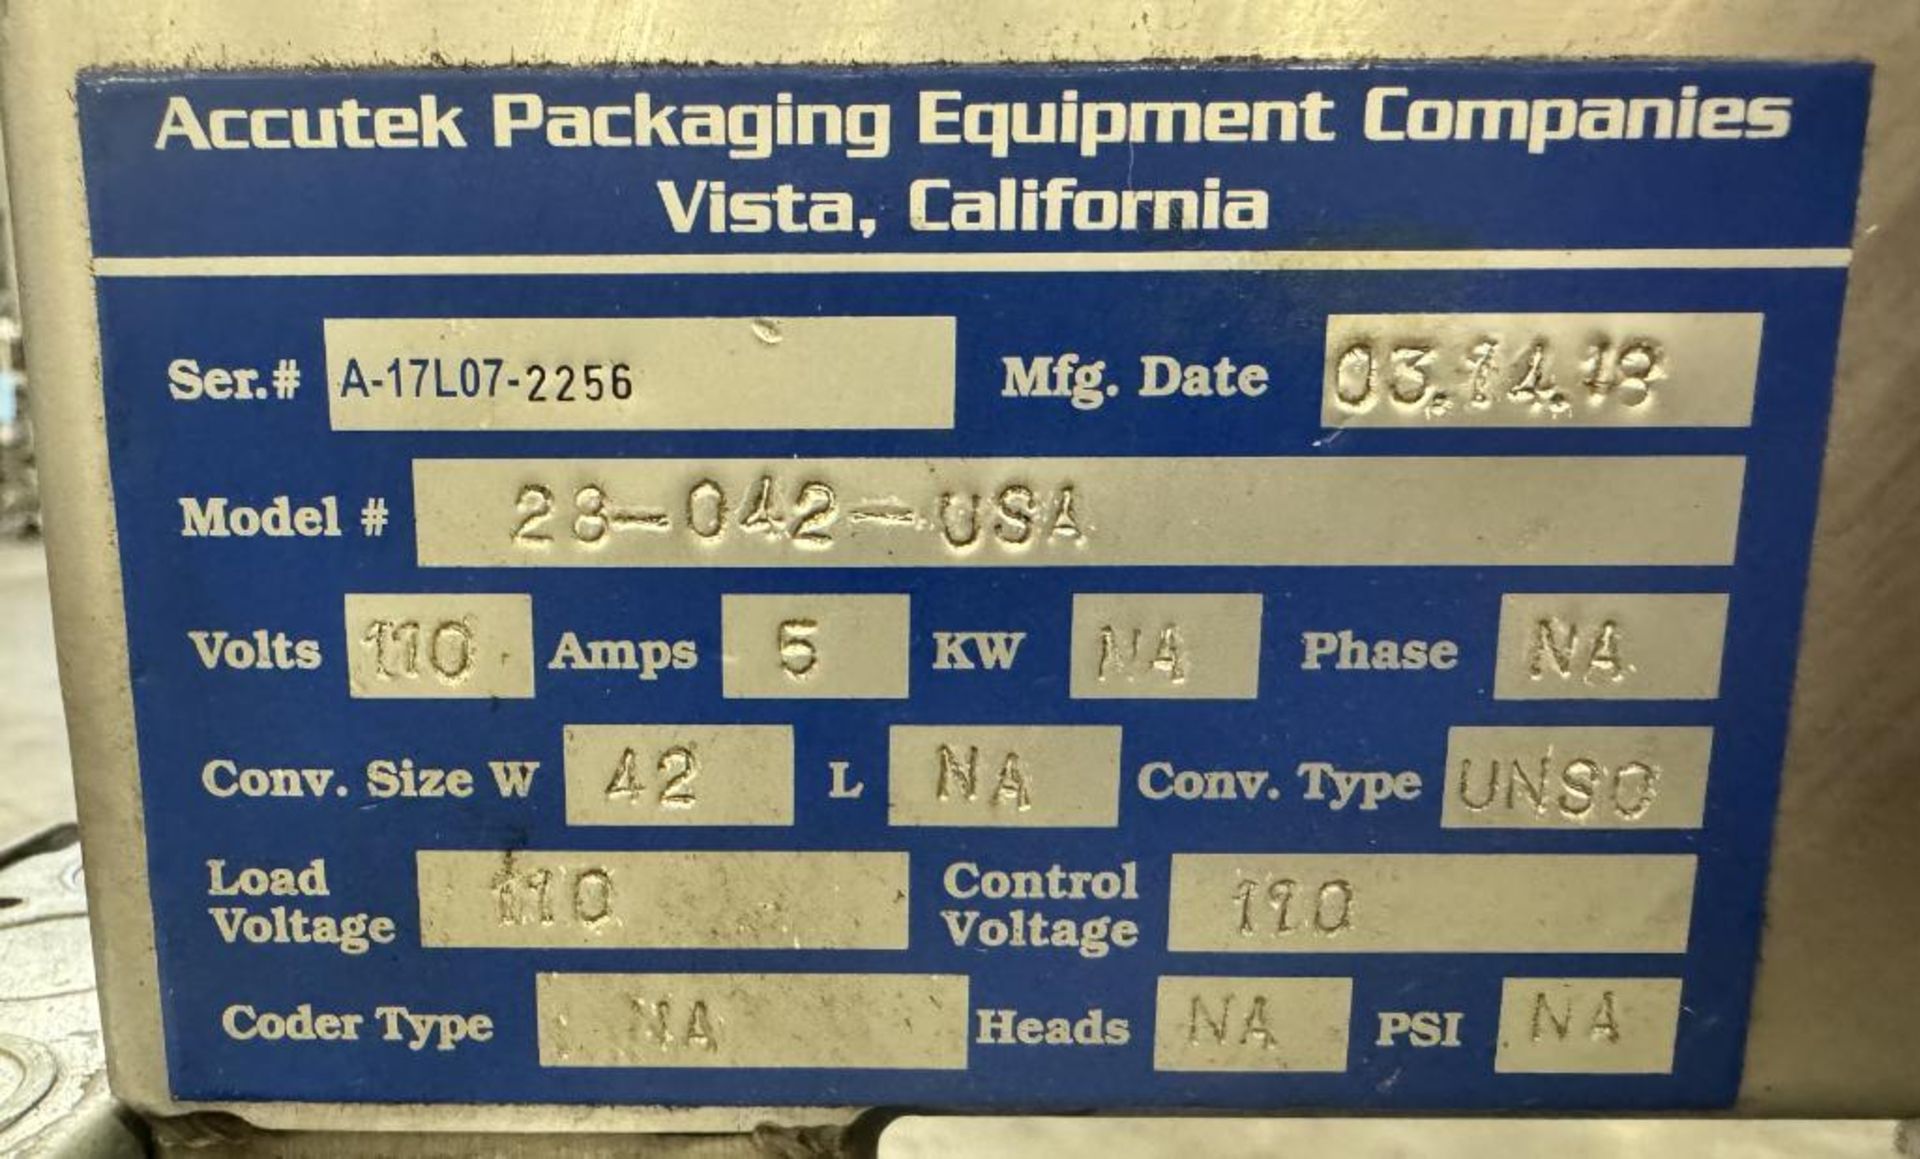 Accutek Packaging Equipment 42" Diameter Unscrambler Turn Table, Model 28-042-USA, Serial# A-17L07-2 - Image 4 of 4